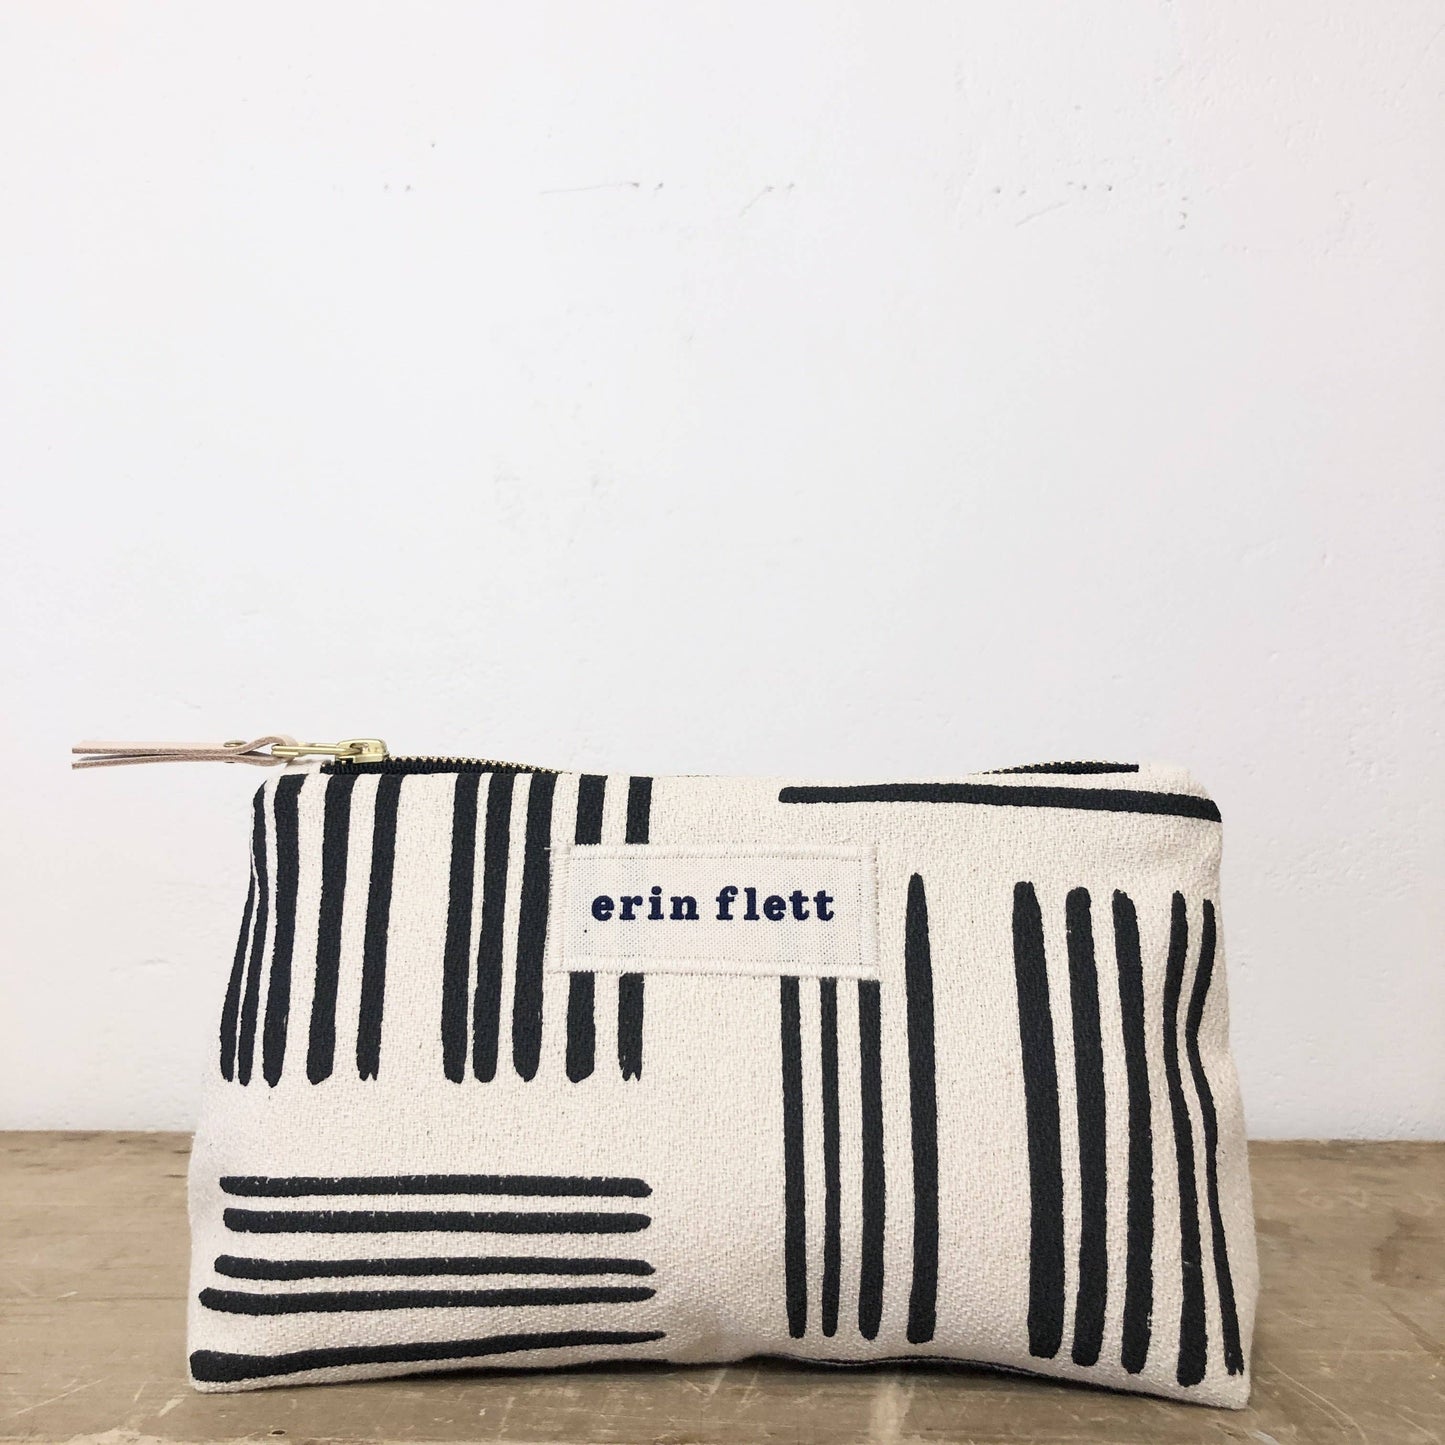 Erin Fleet Bags & Straps